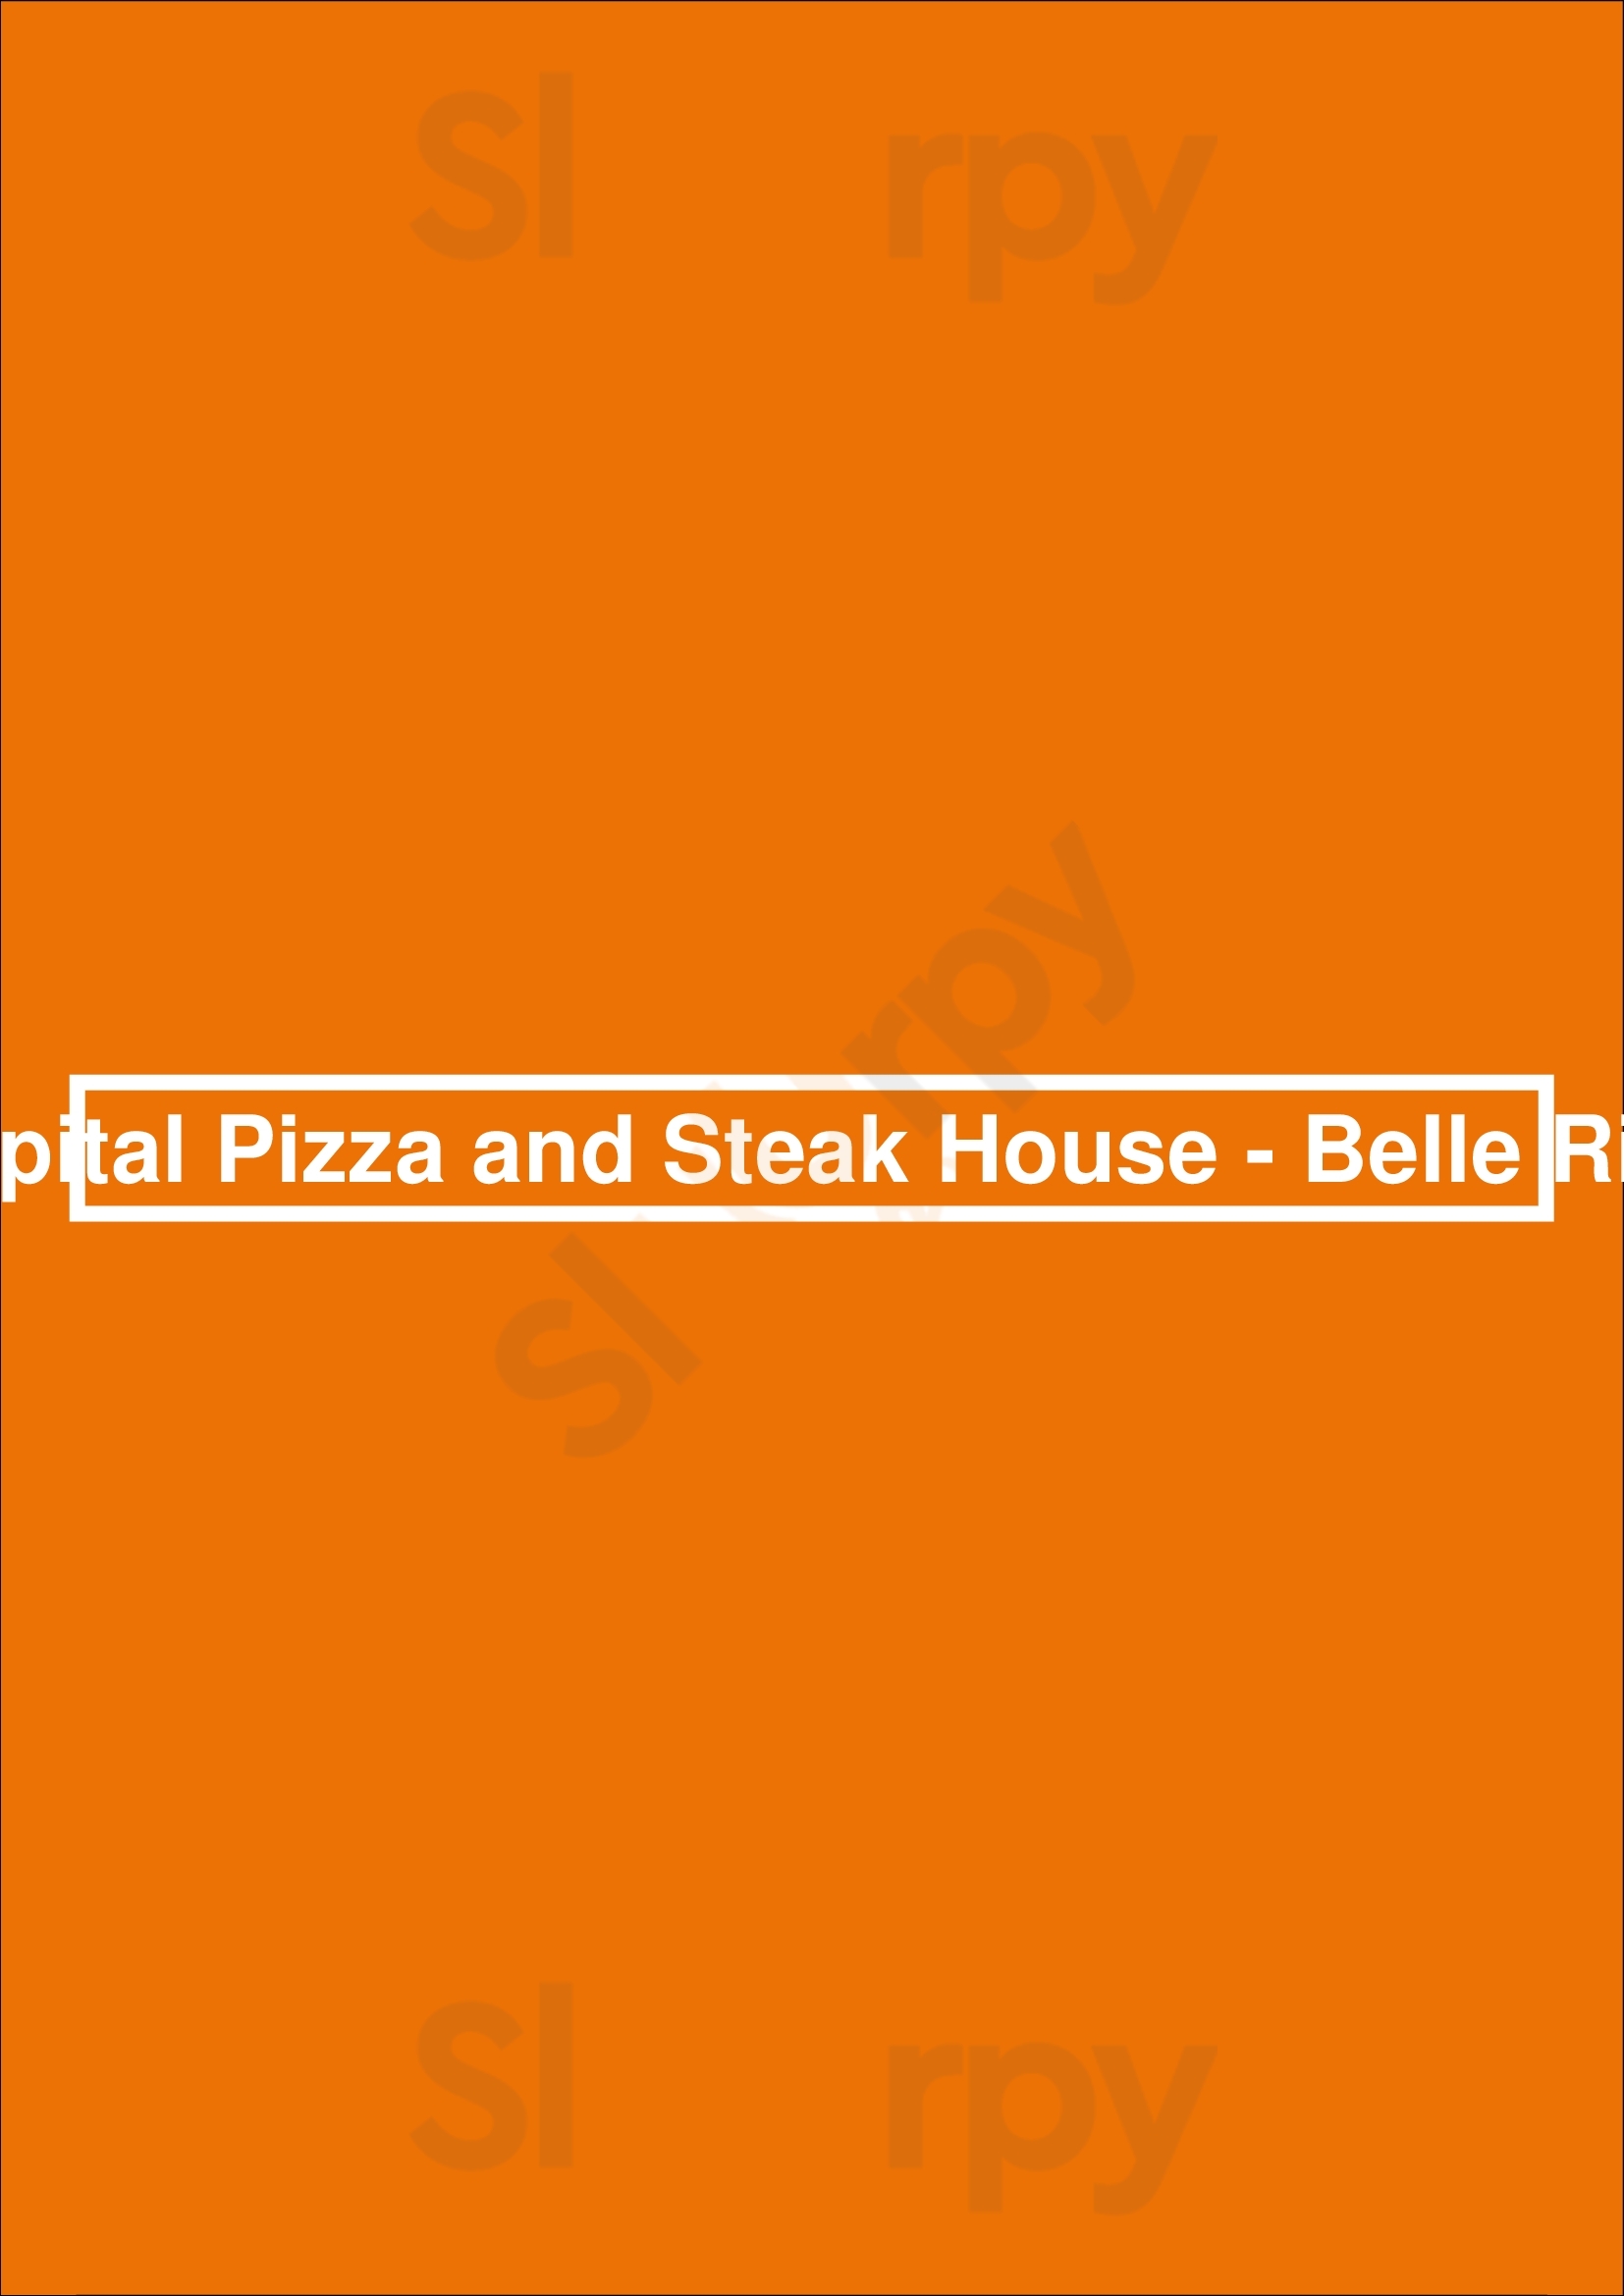 Capital Pizza And Steak House - Belle Rive Edmonton Menu - 1